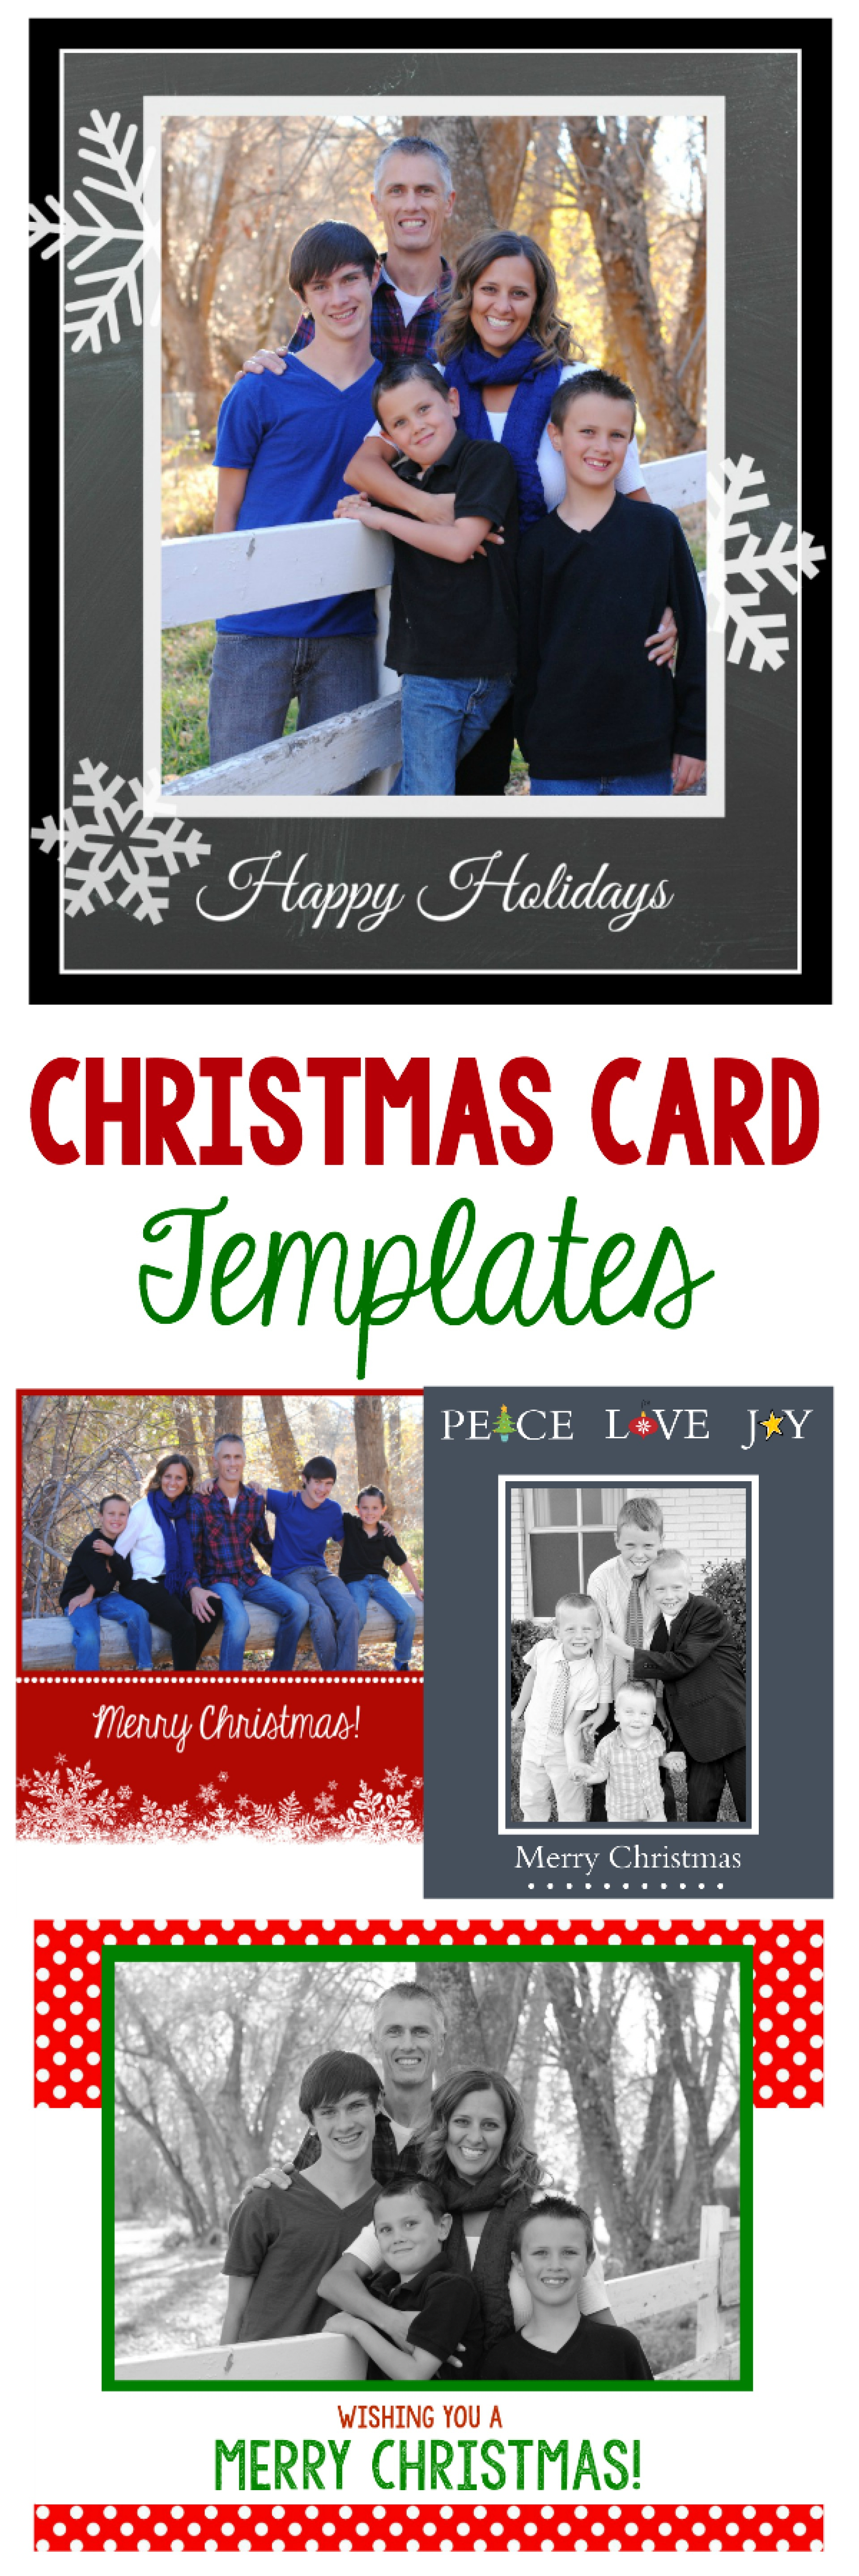 009 Free Photo Christmas Card Templates Template Marvelous Regarding Free Christmas Card Templates For Photoshop